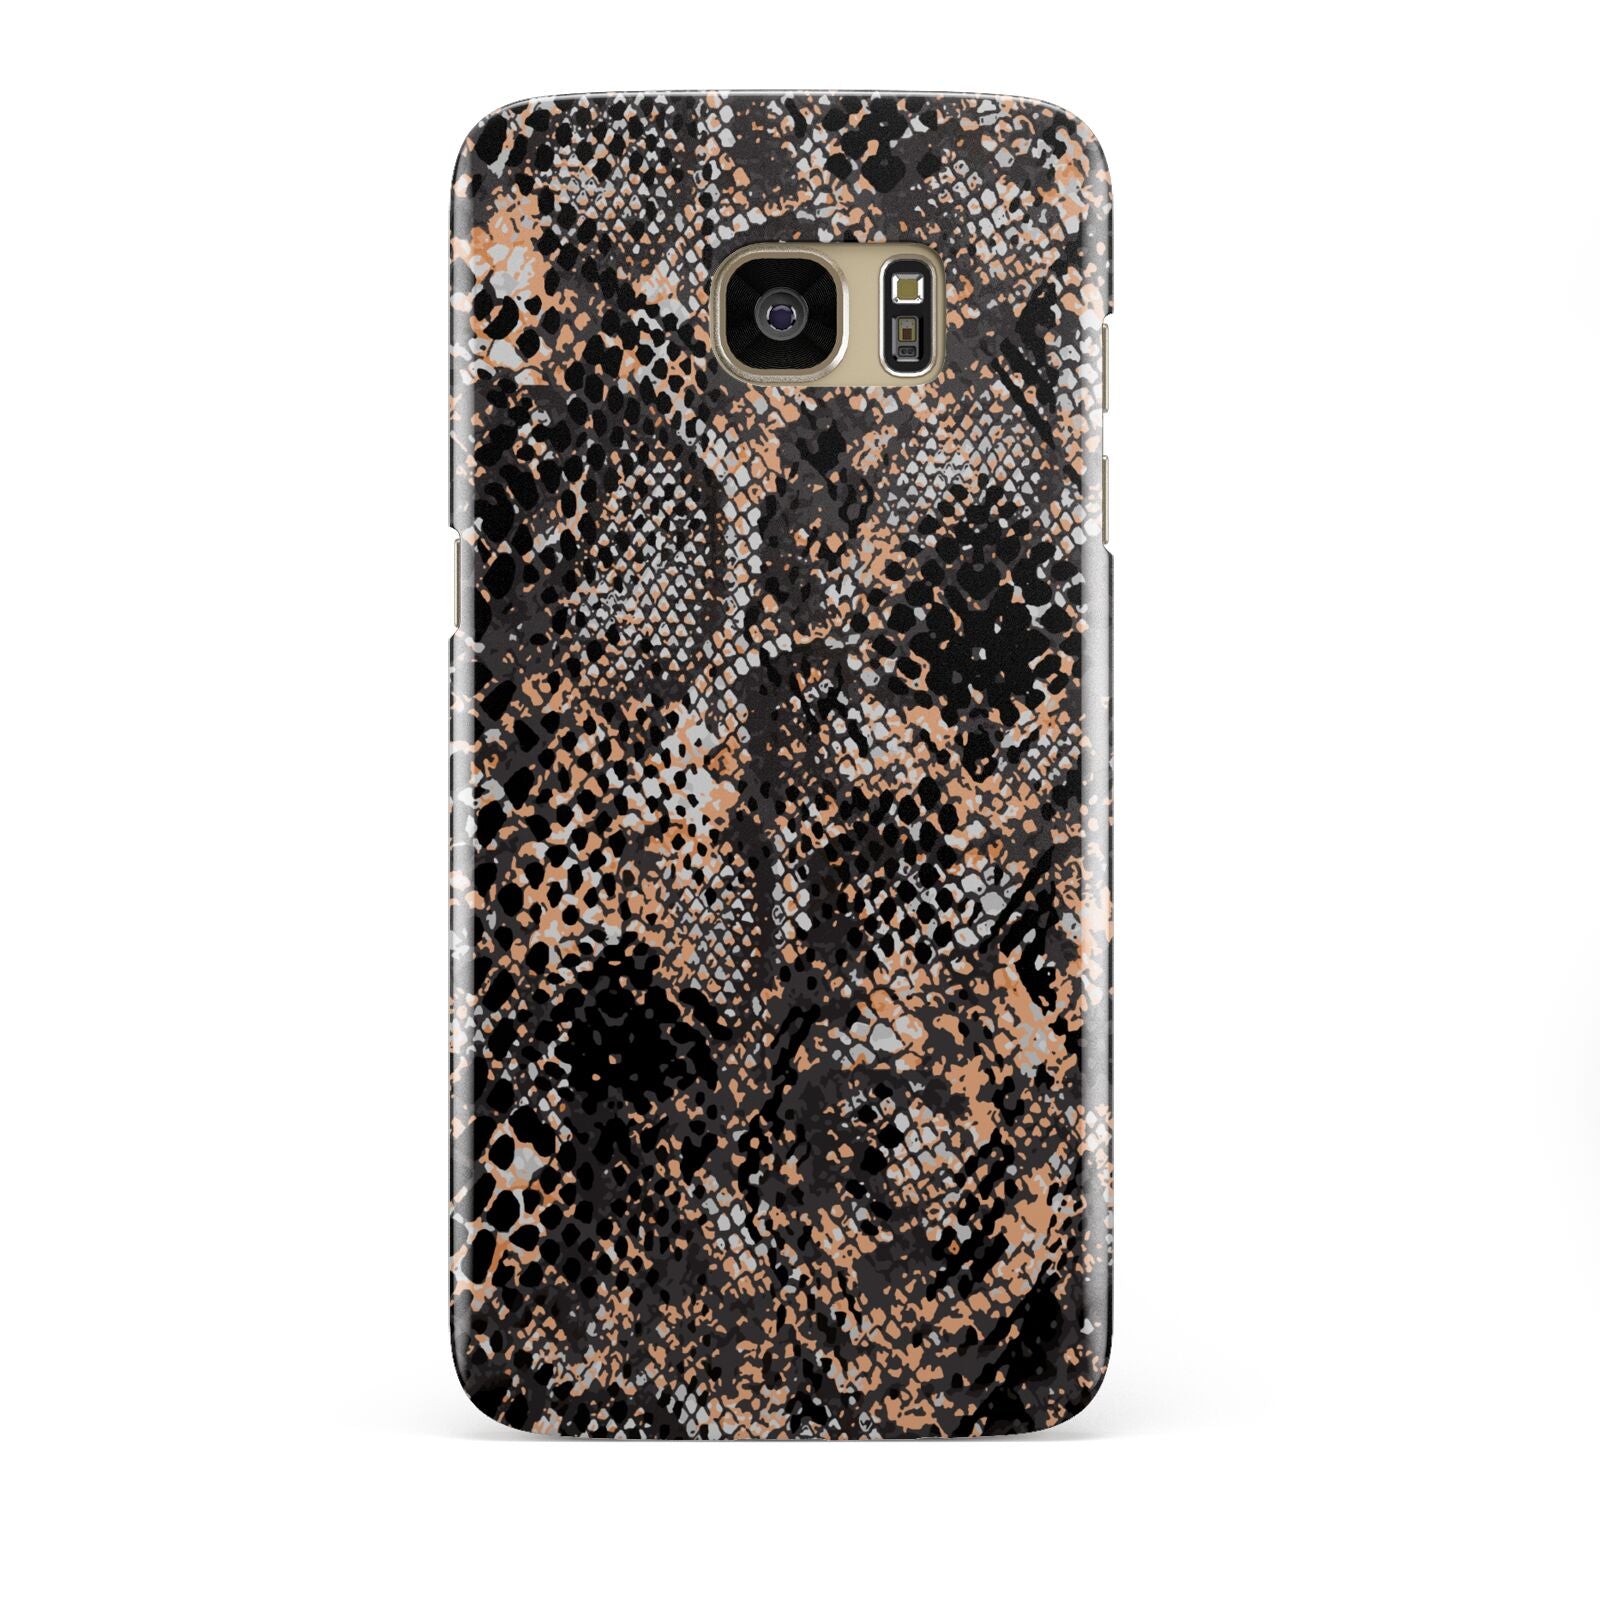 Snakeskin Print Samsung Galaxy S7 Edge Case